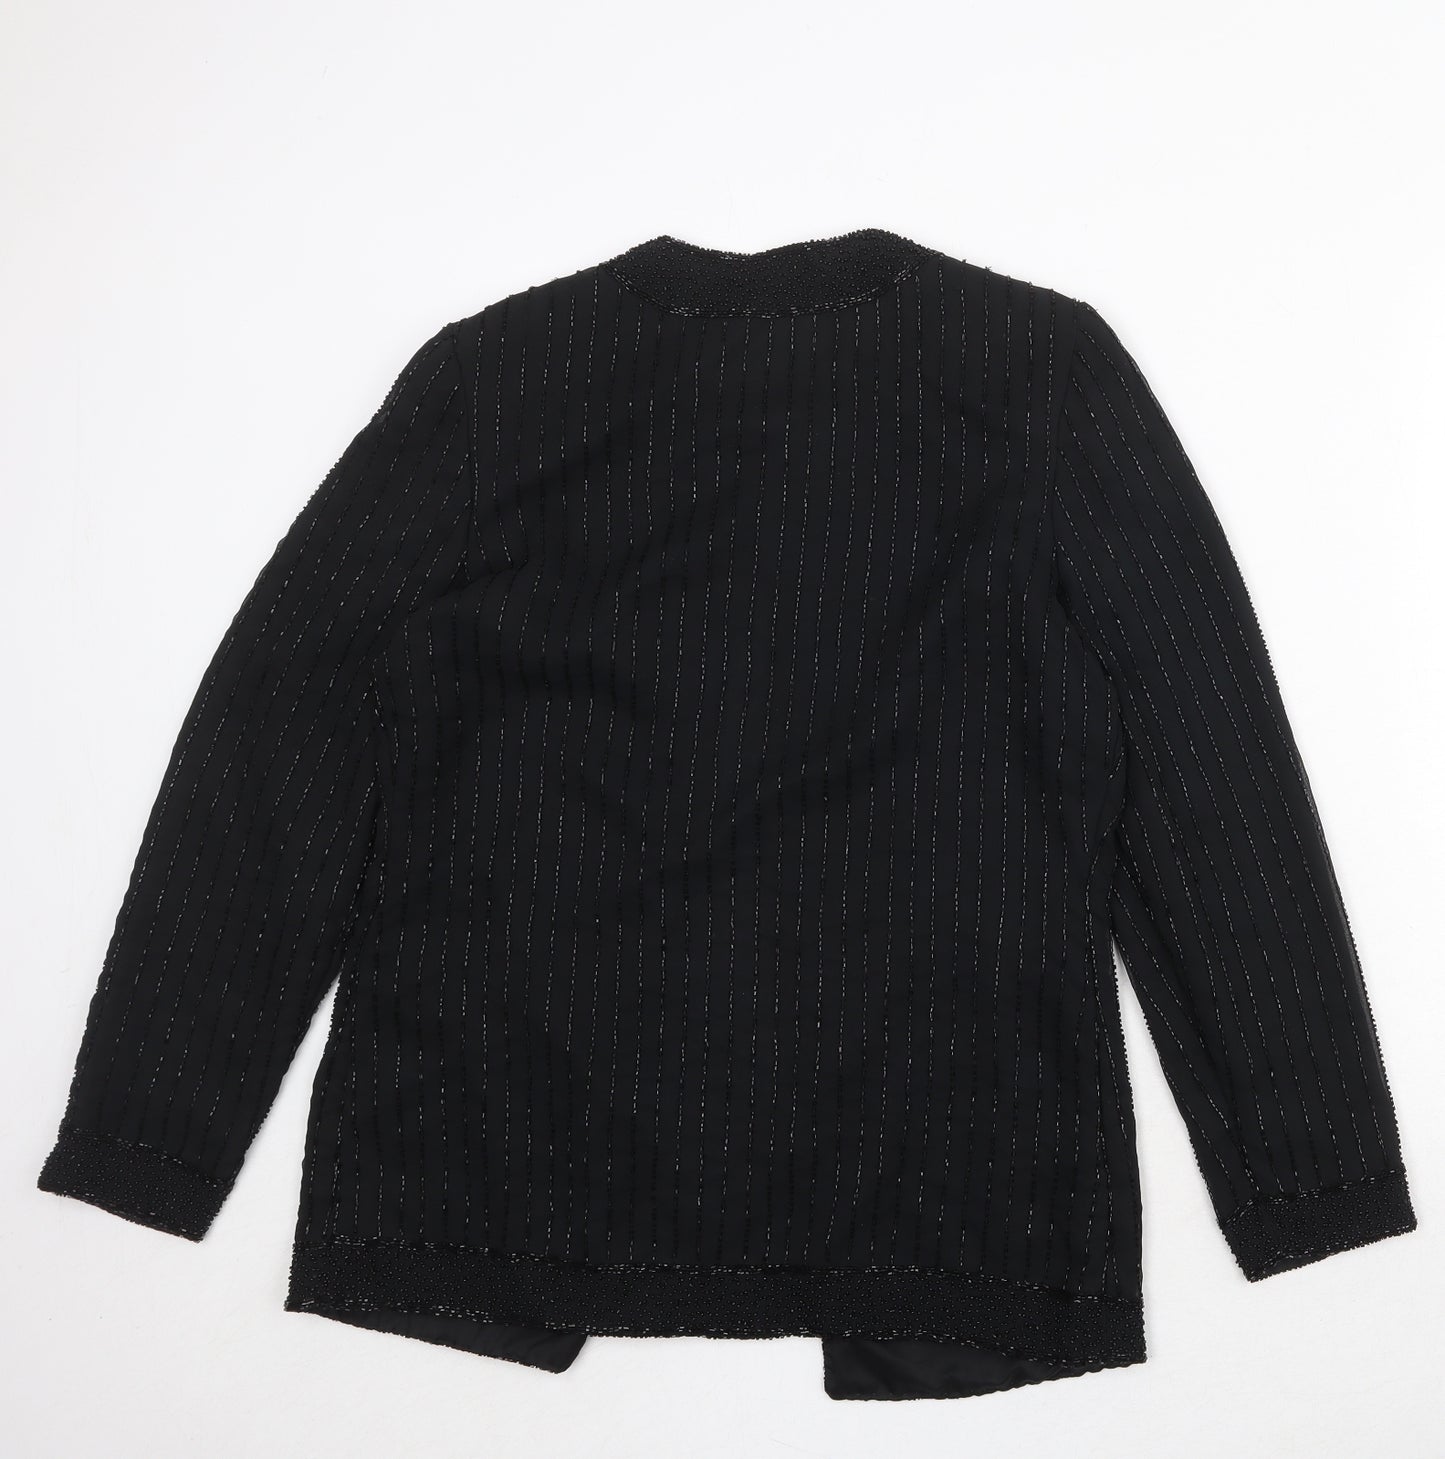 Canada Womens Black Polyester Jacket Blazer Size 10 - Beaded